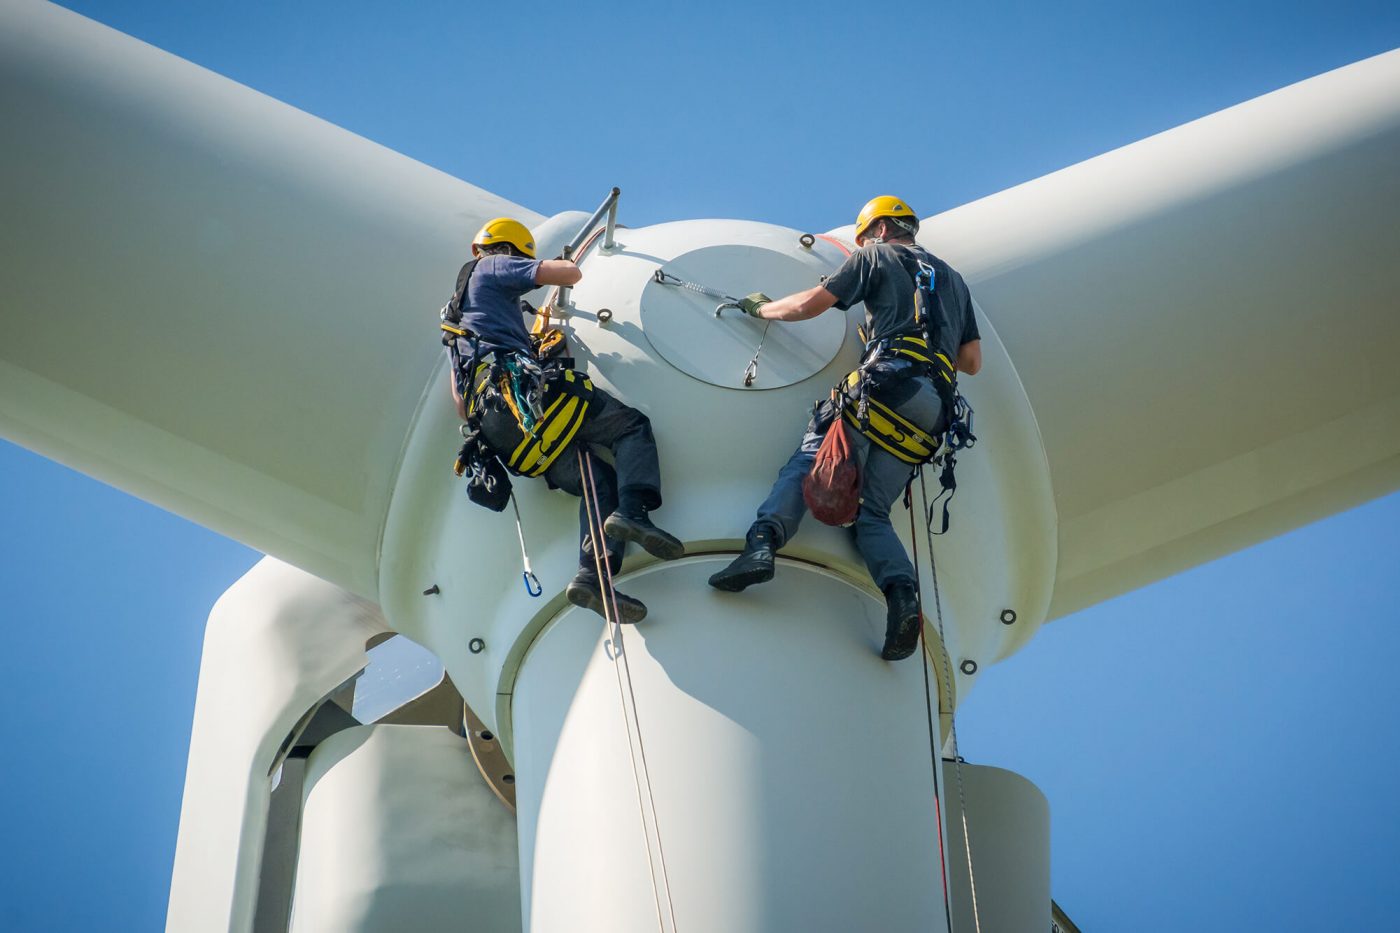 field inspection on the wind turbine